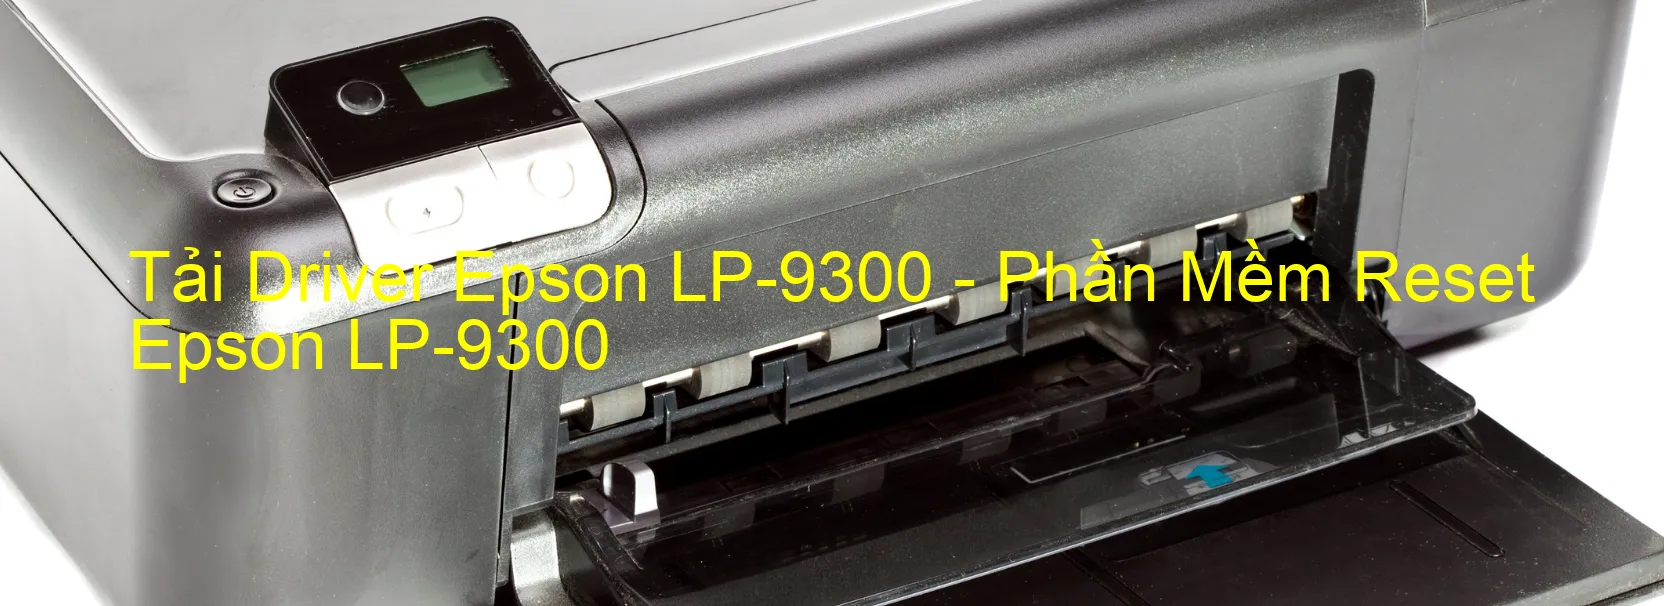 Driver Epson LP-9300, Phần Mềm Reset Epson LP-9300